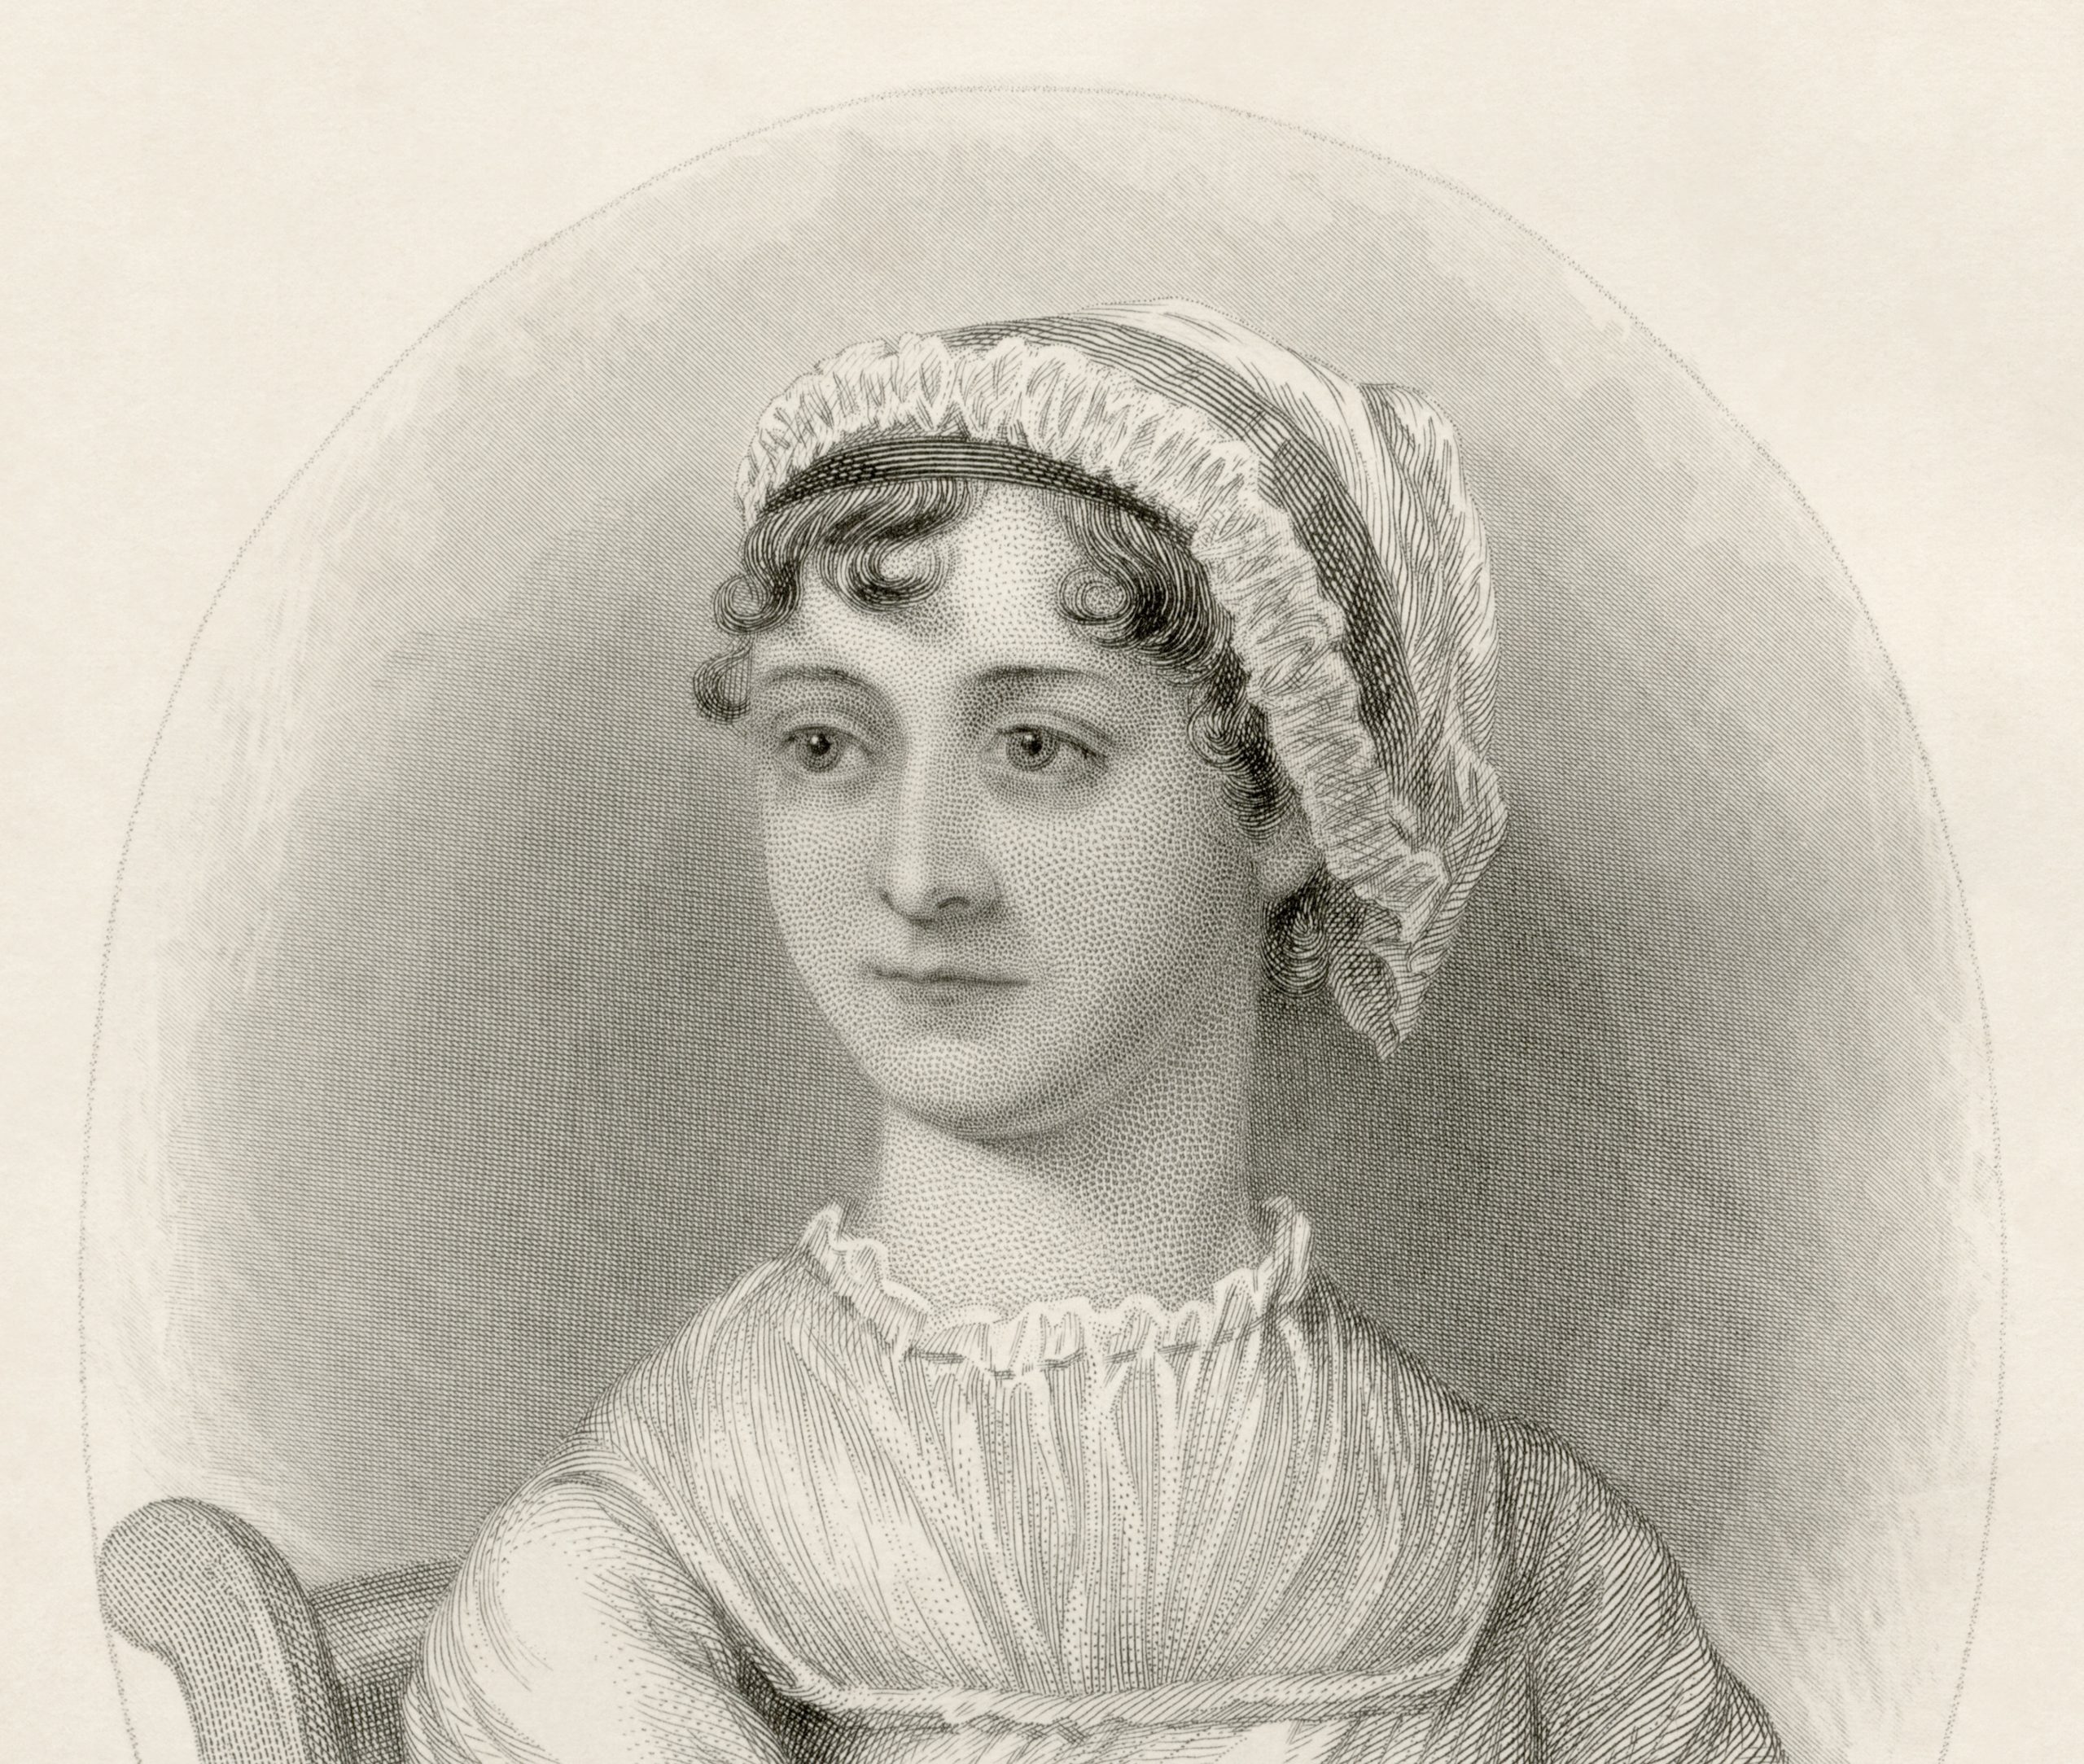 Jane Austen for the Nineties